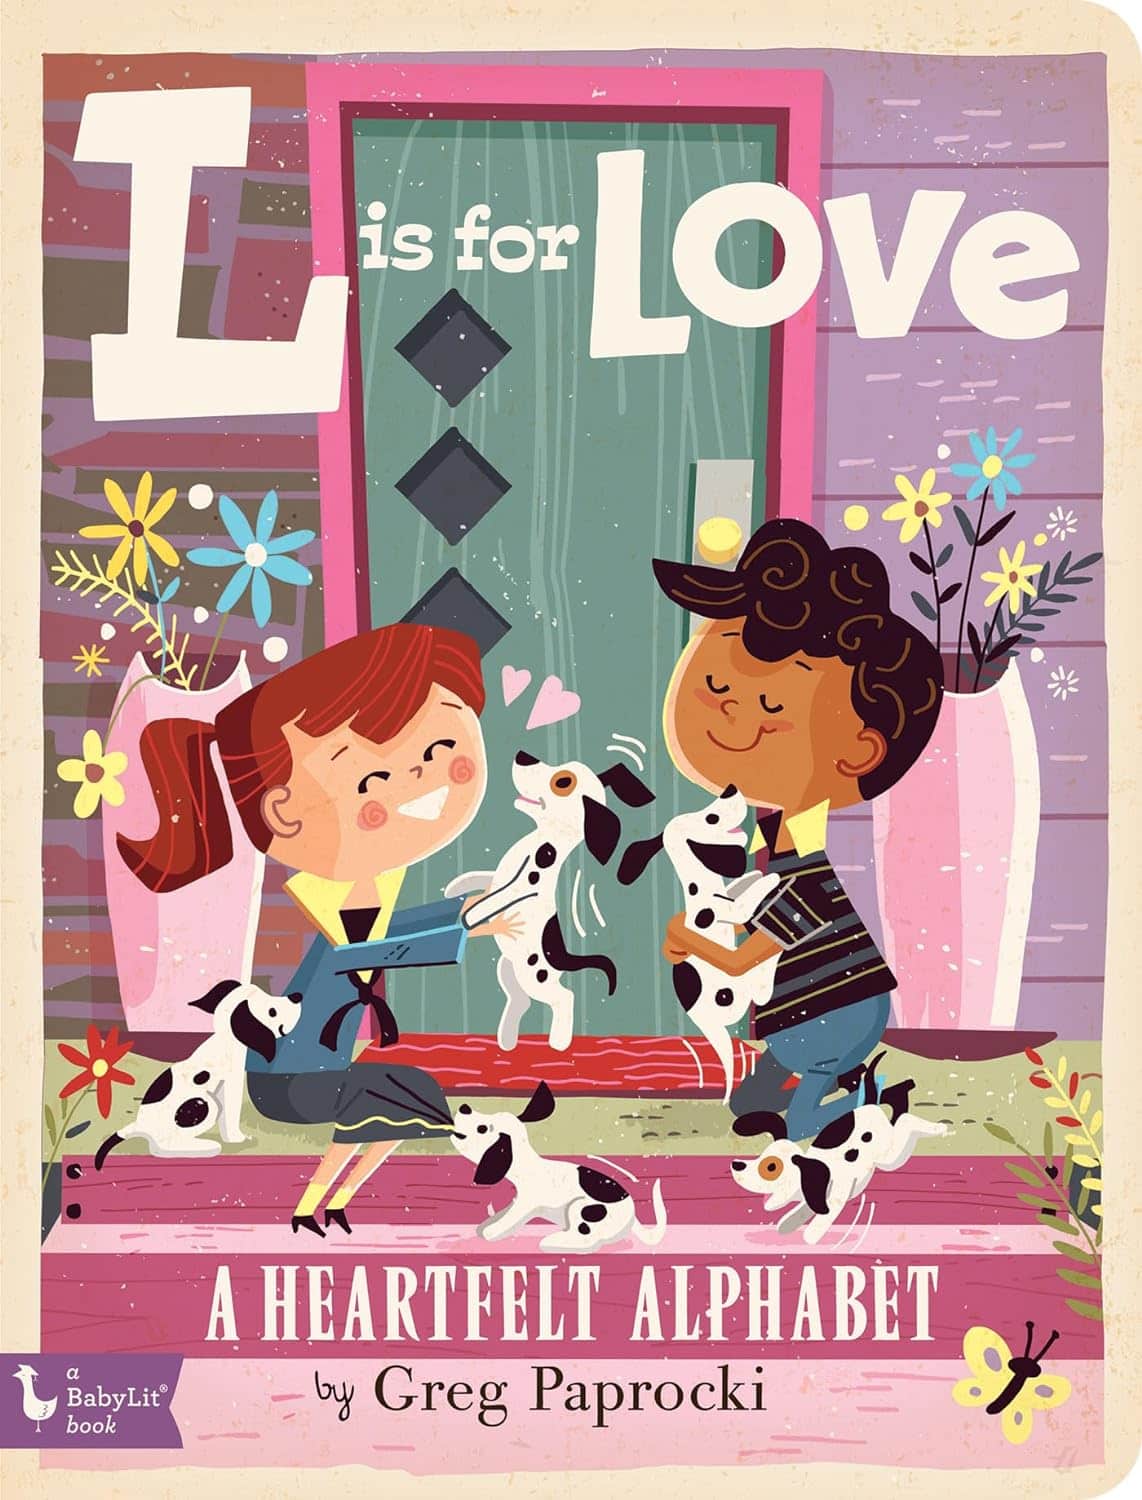 “L is for Love: A Heartfelt Alphabet” by Greg Paprocki